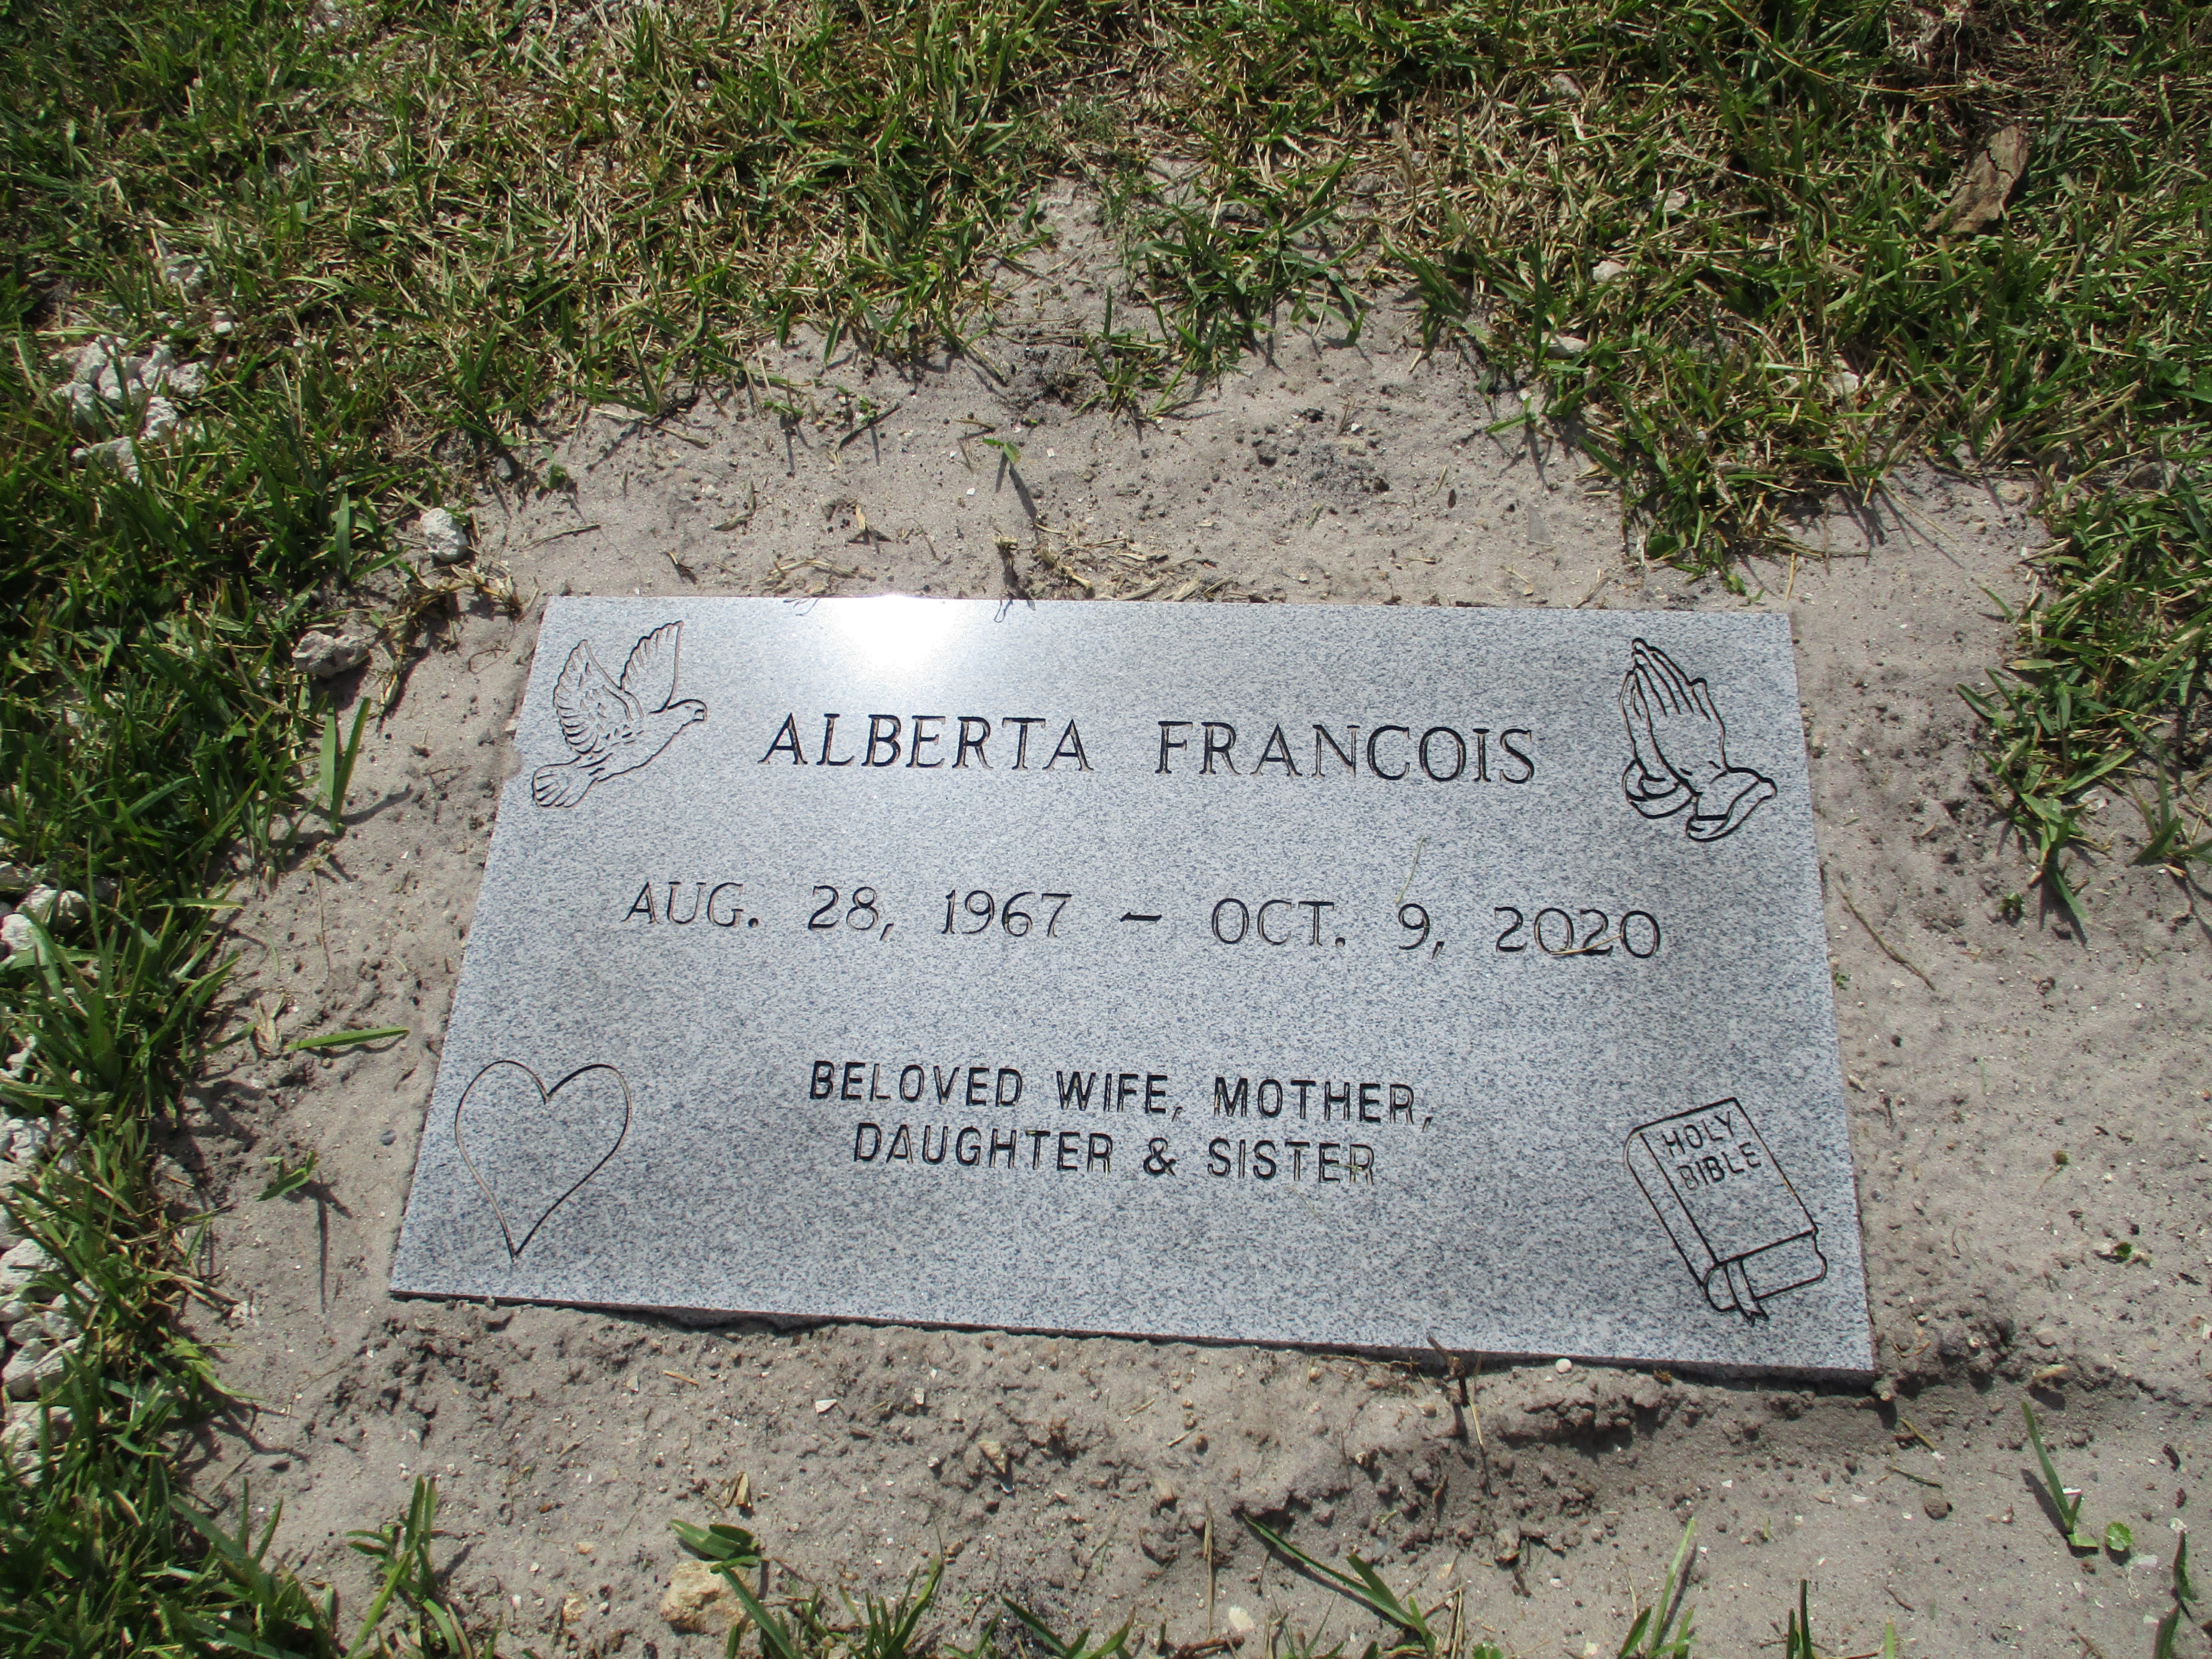 Alberta Francois